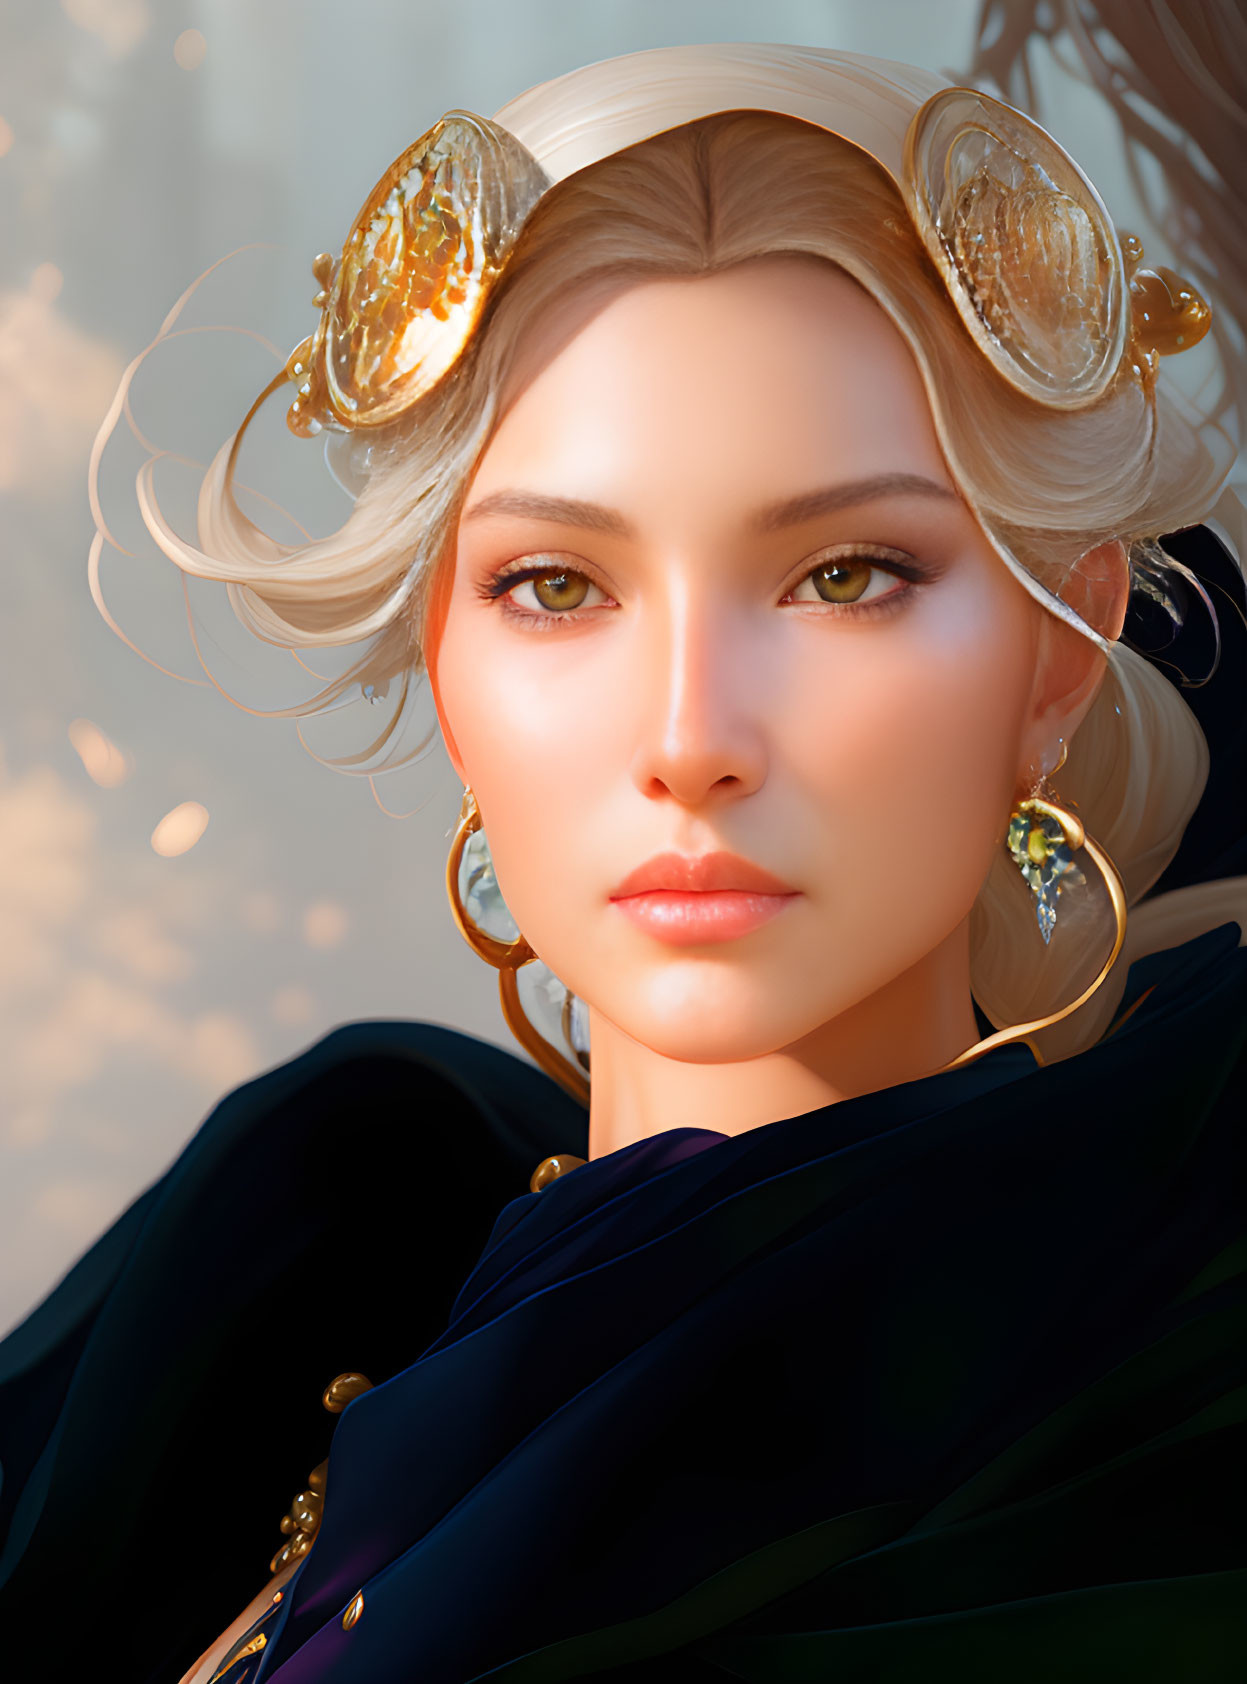 Digital portrait of woman in golden hoop earrings, ornate hair clips, dark blue cloak.